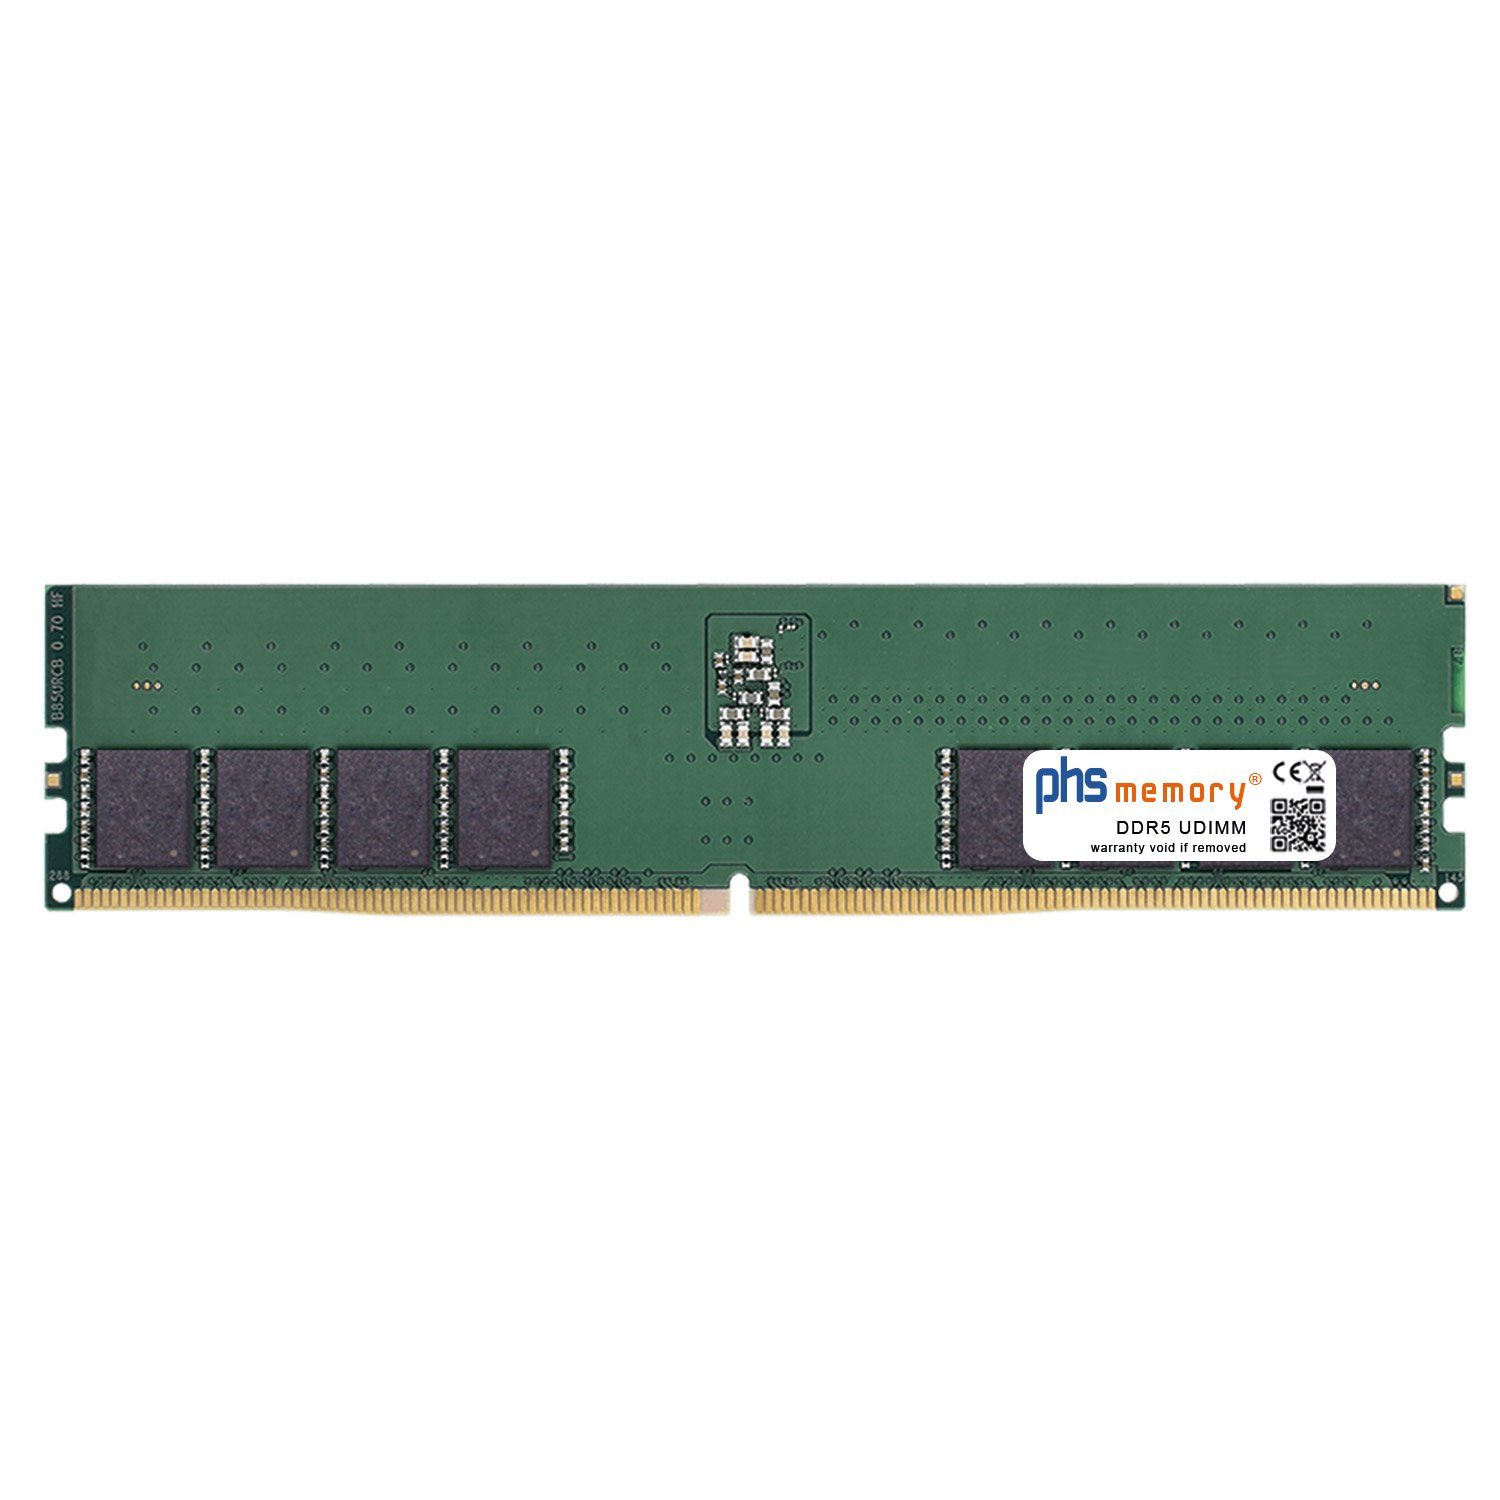 PHS-memory RAM für Captiva Ultimate Gaming R70-989 Arbeitsspeicher